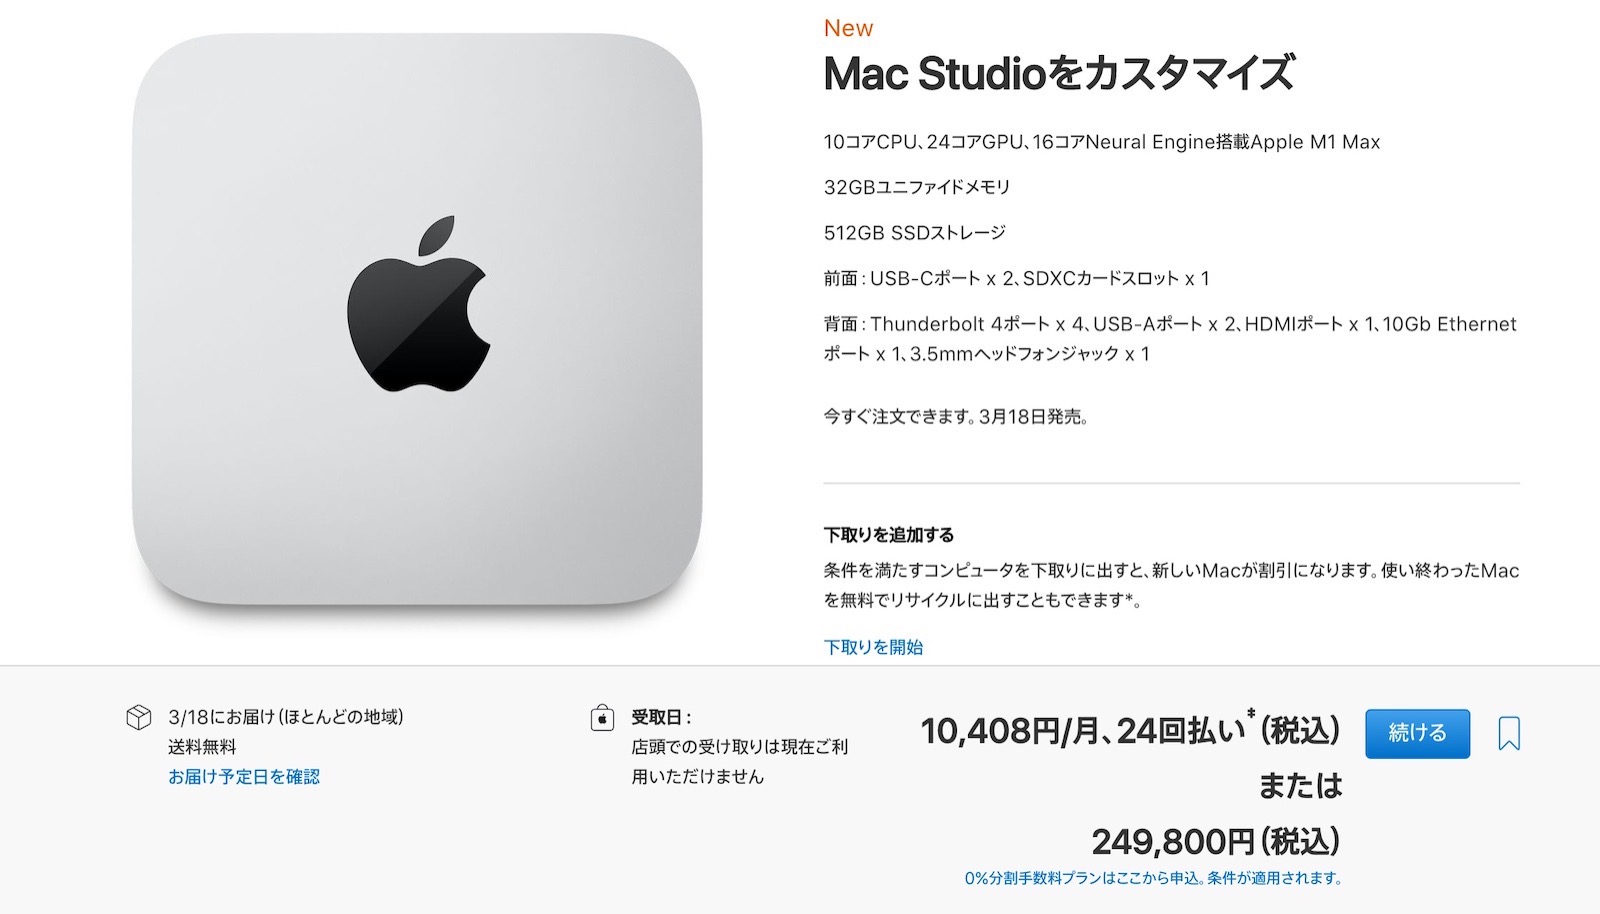 Mac studio pricing